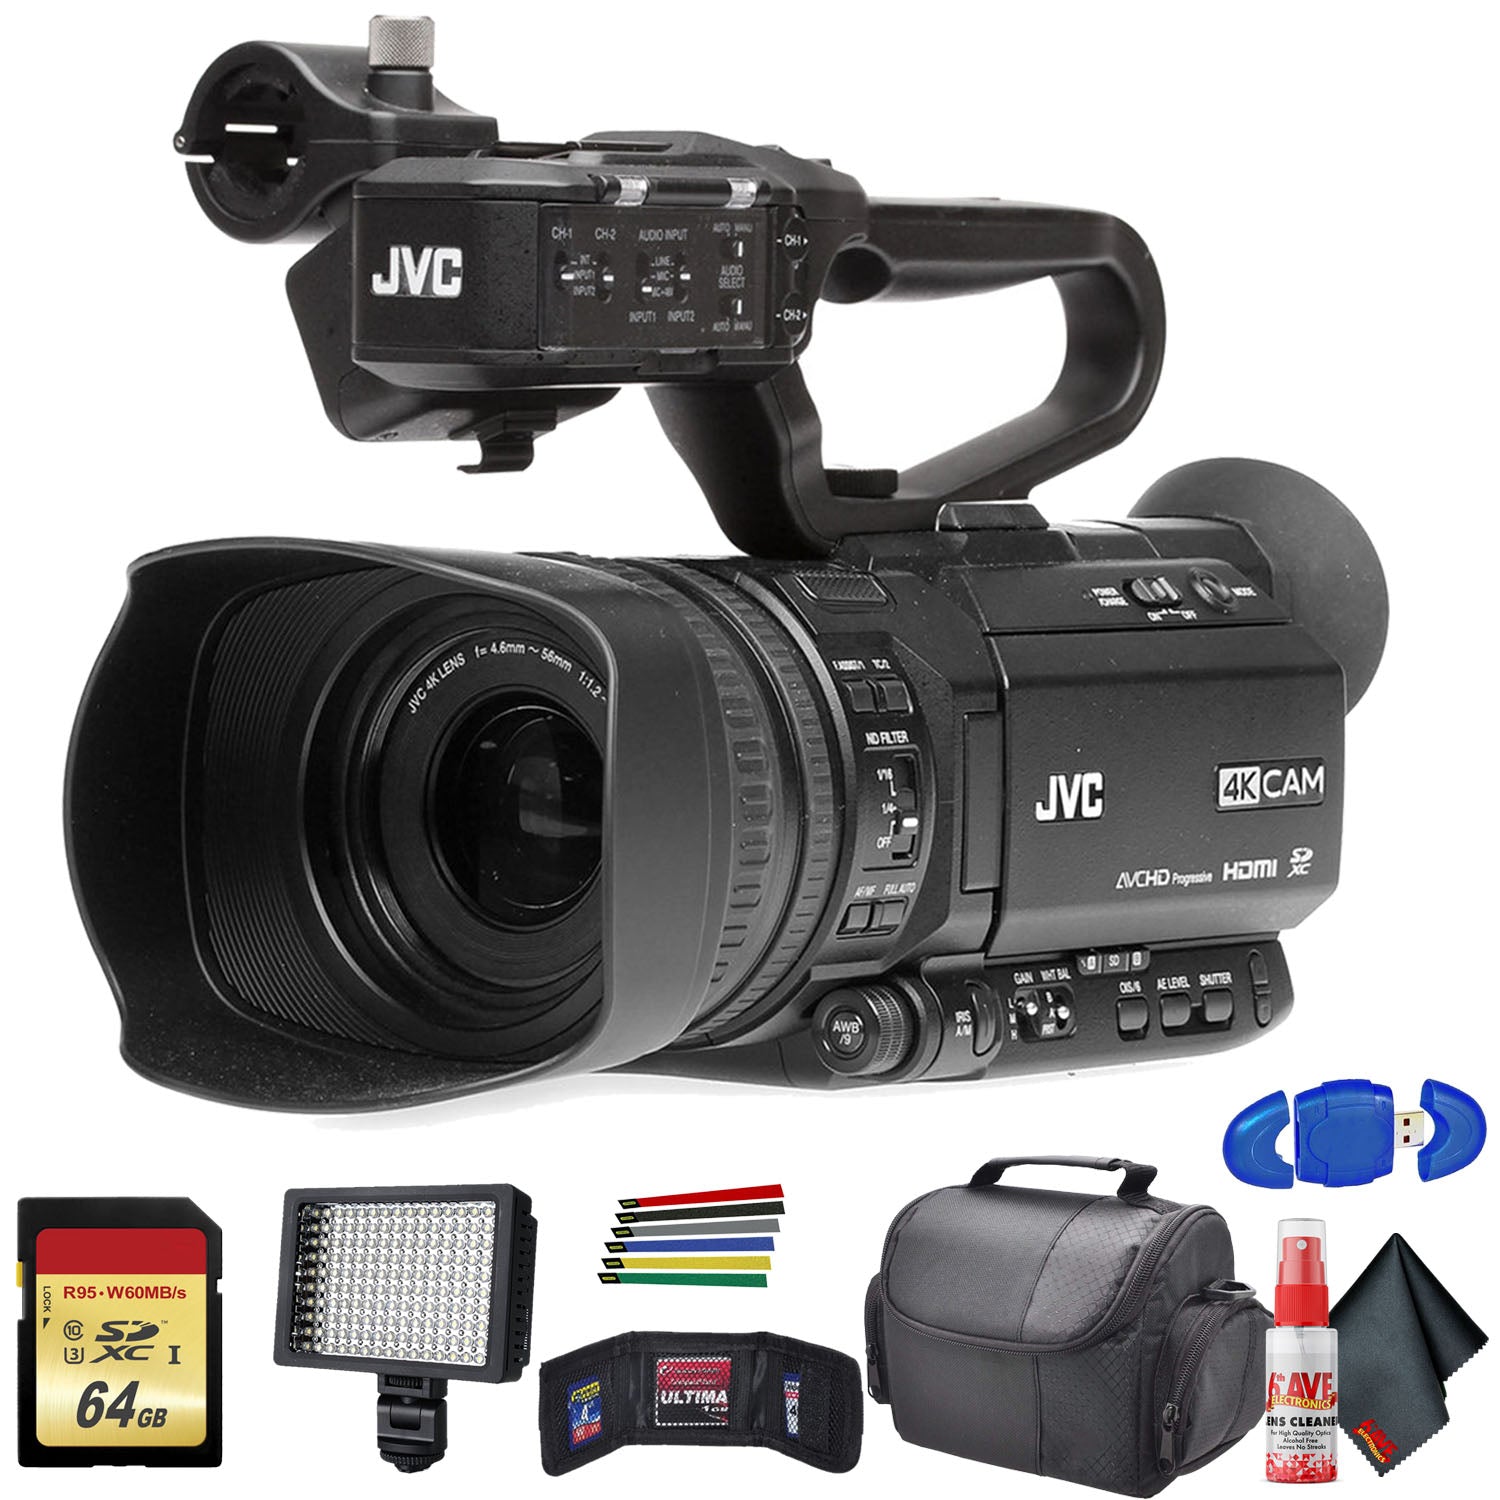 JVC GY-HM180 Ultra HD 4K Camcorder with HD-SDI (GY-HM180U) With Base Bundle